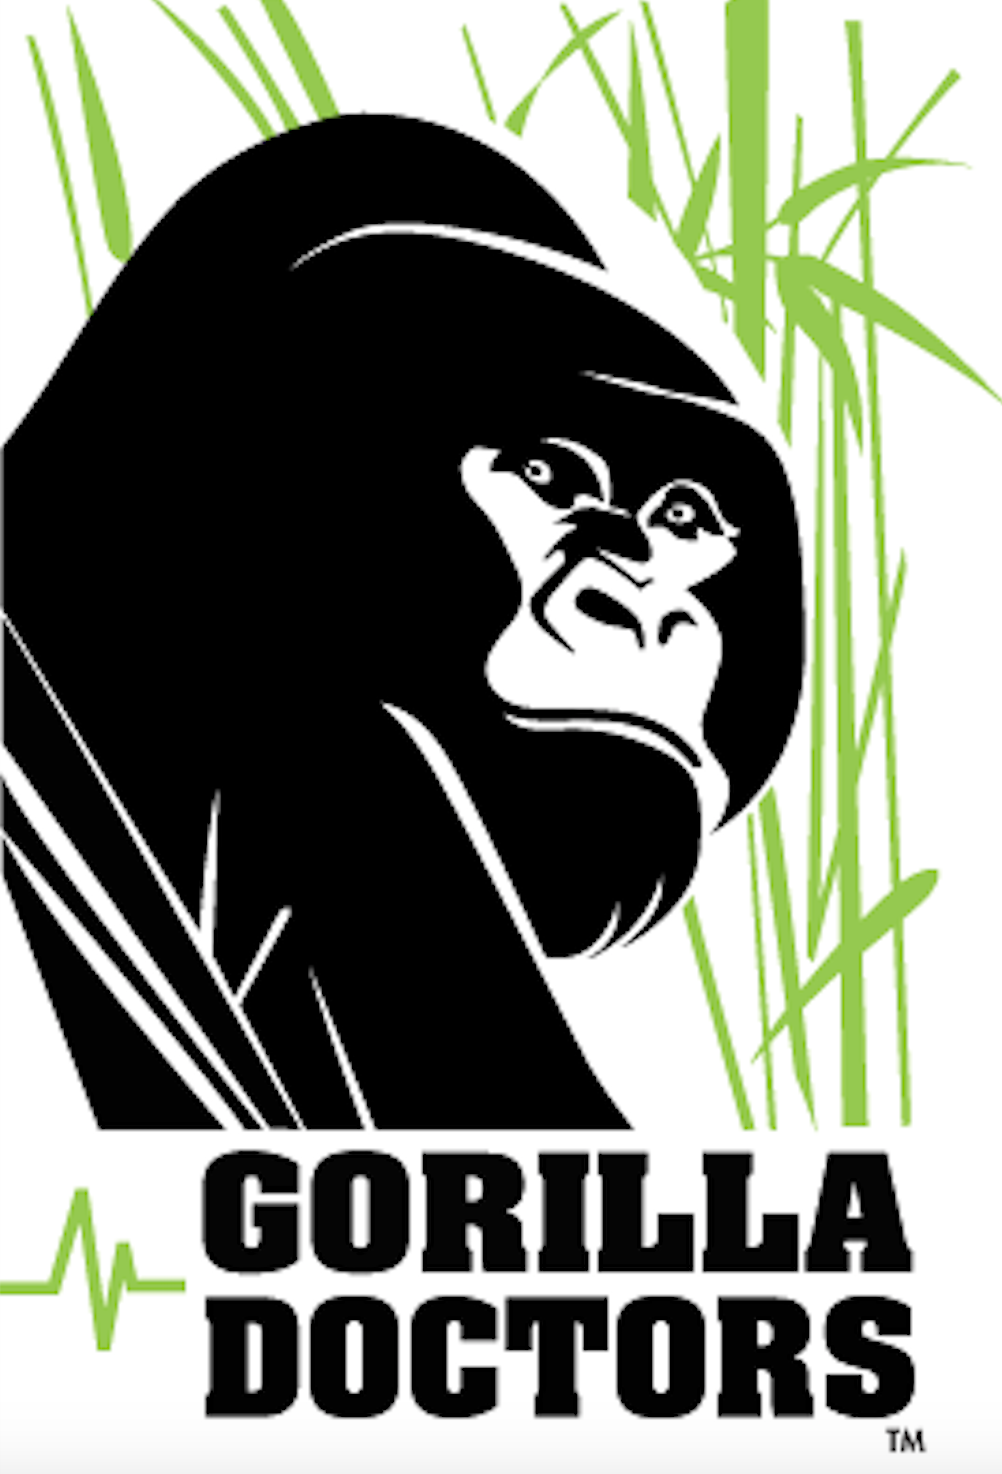 LIA Announces the Winner of the Gorilla Doctors Competition